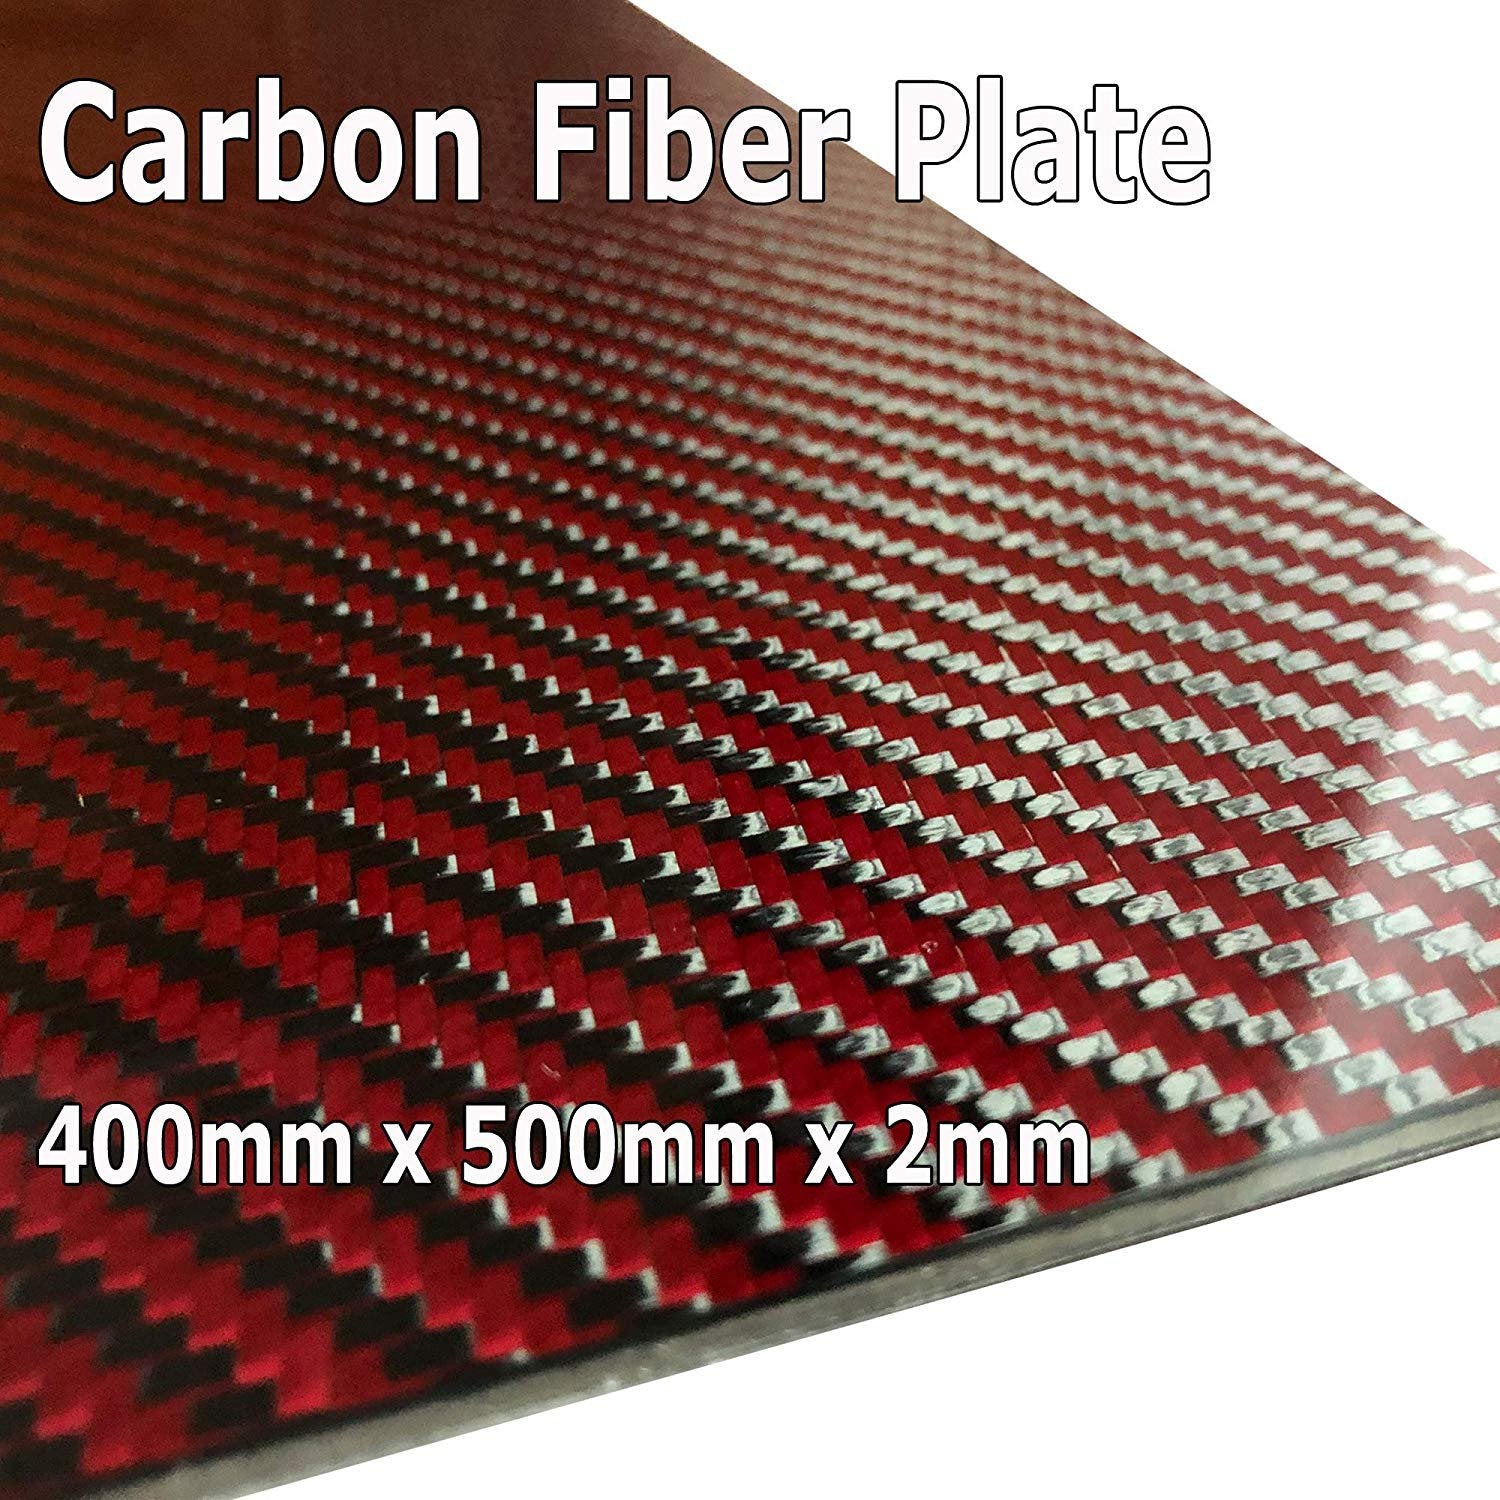 2) Kevlar Plates - 100mm x 250mm x 6mm Thick - 100% Kevlar Plain